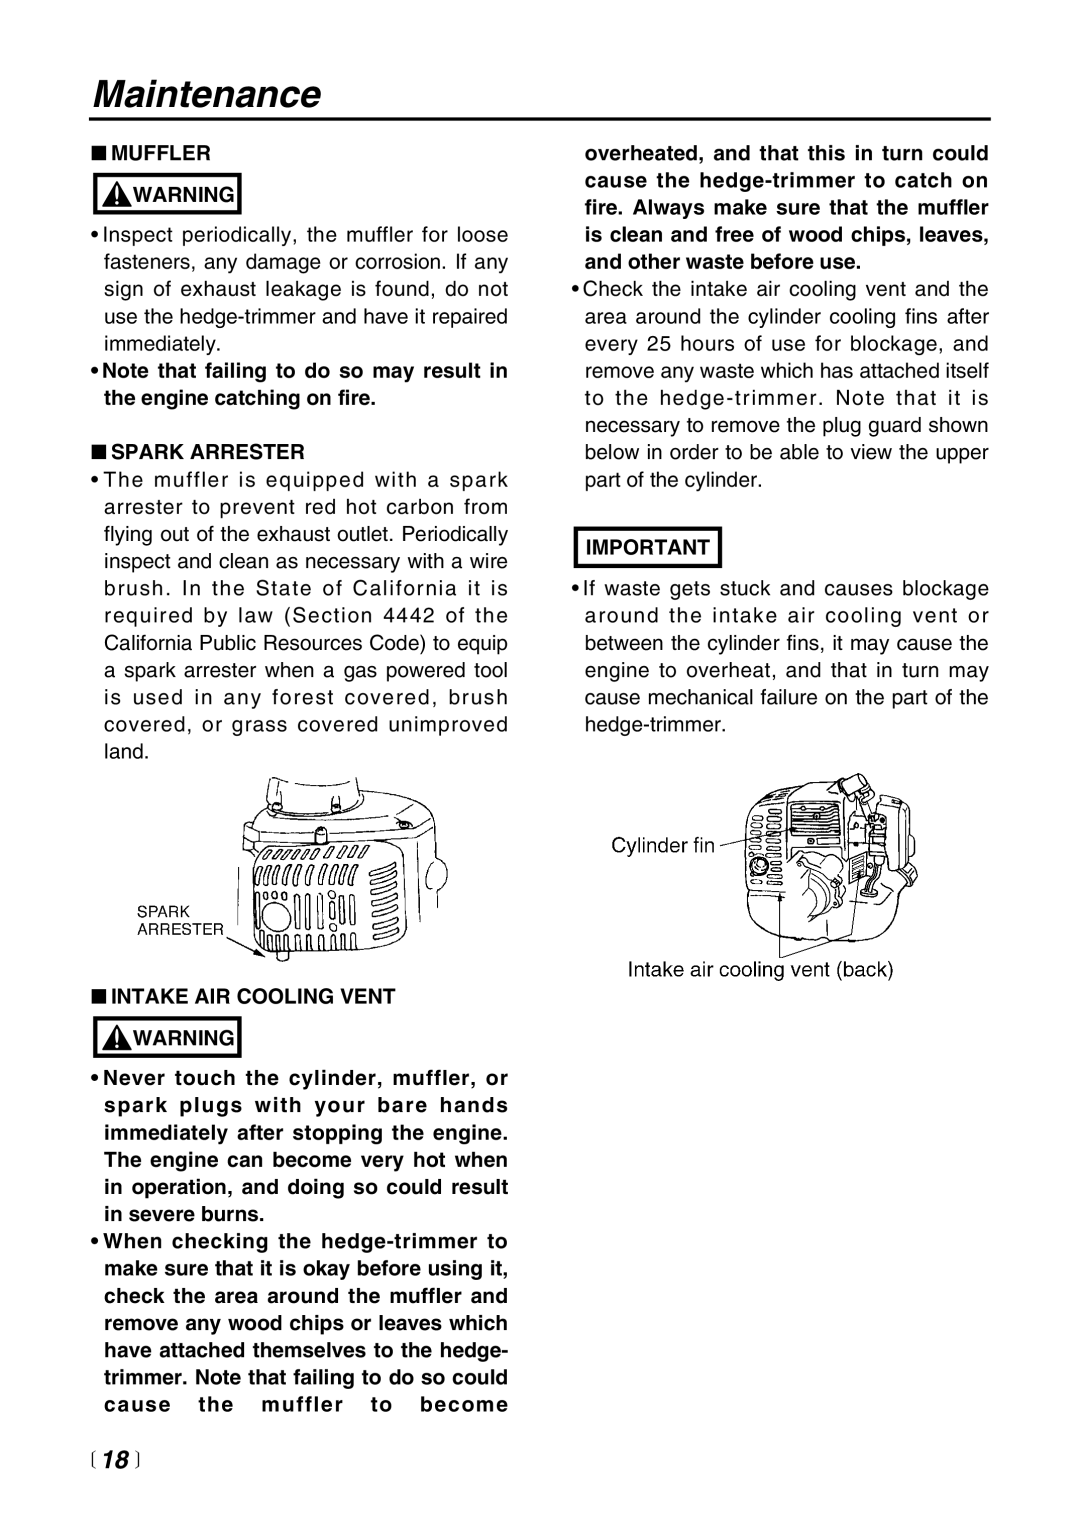 RedMax CHT2200 manual Muffler, Spark Arrester, Intake AIR Cooling Vent Warning 